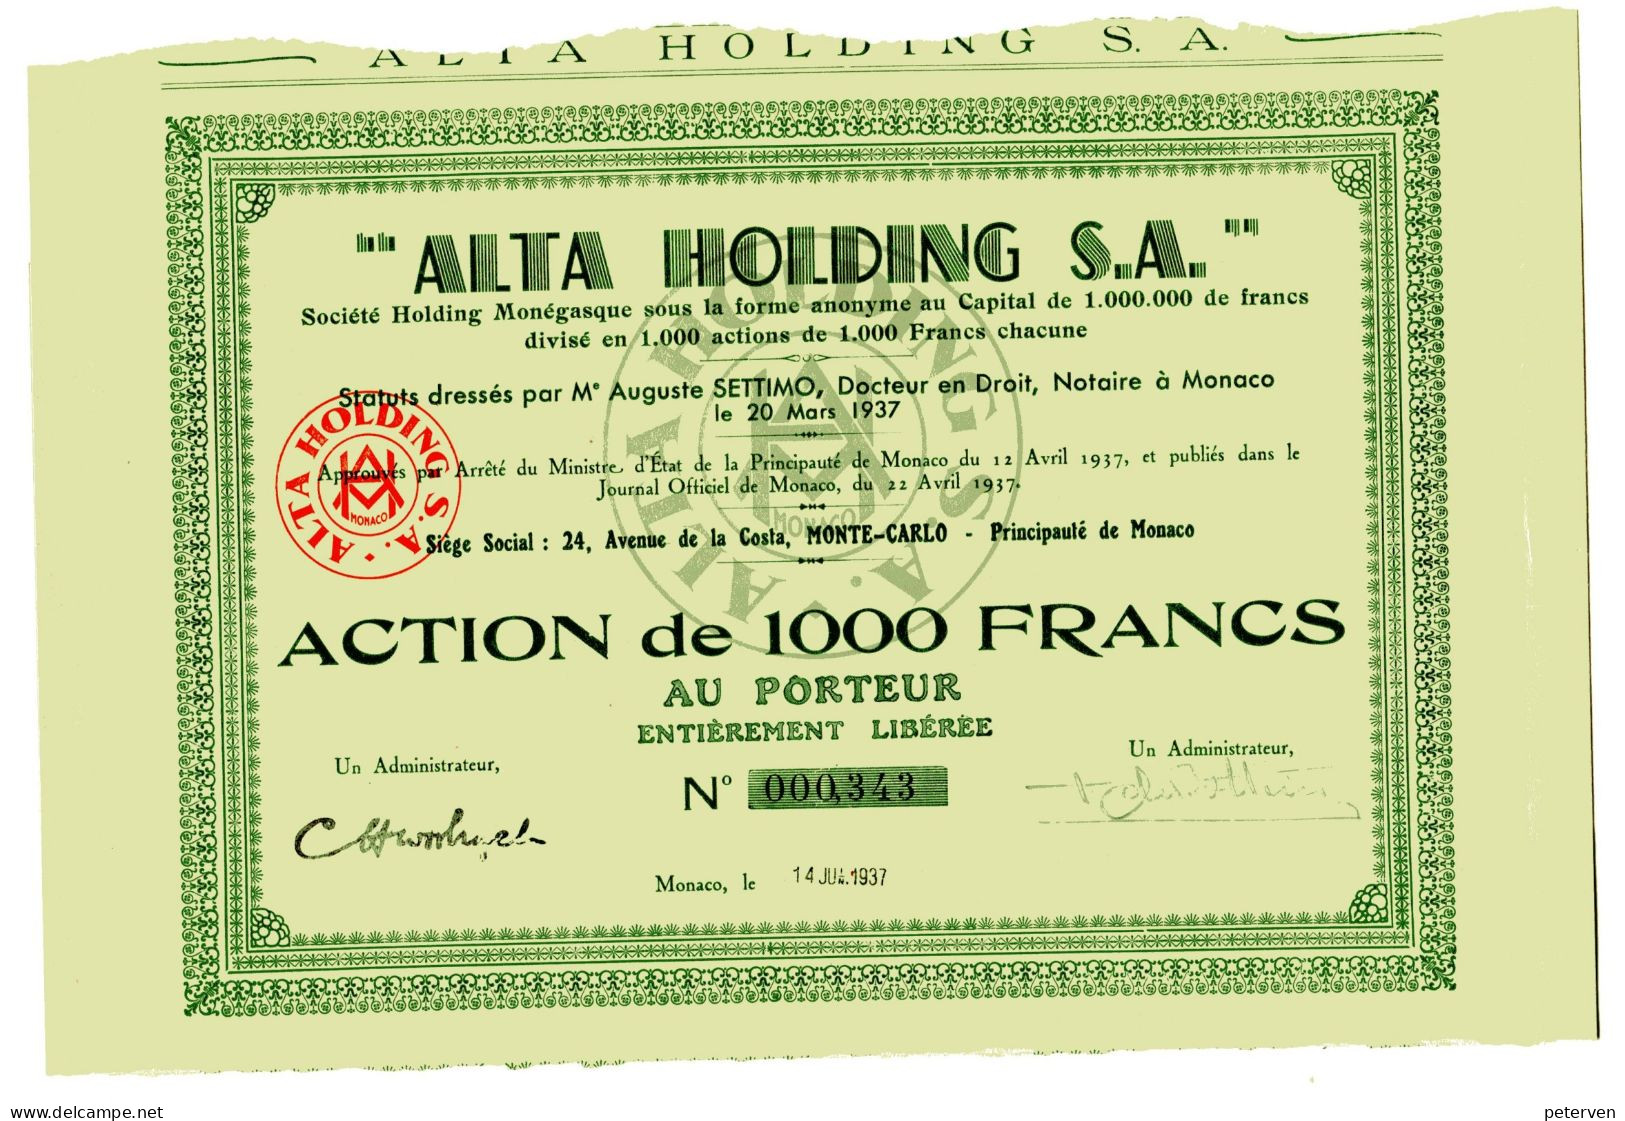 "ALTA HOLDING S.A." - Société Holding Monégasque - Bank & Versicherung